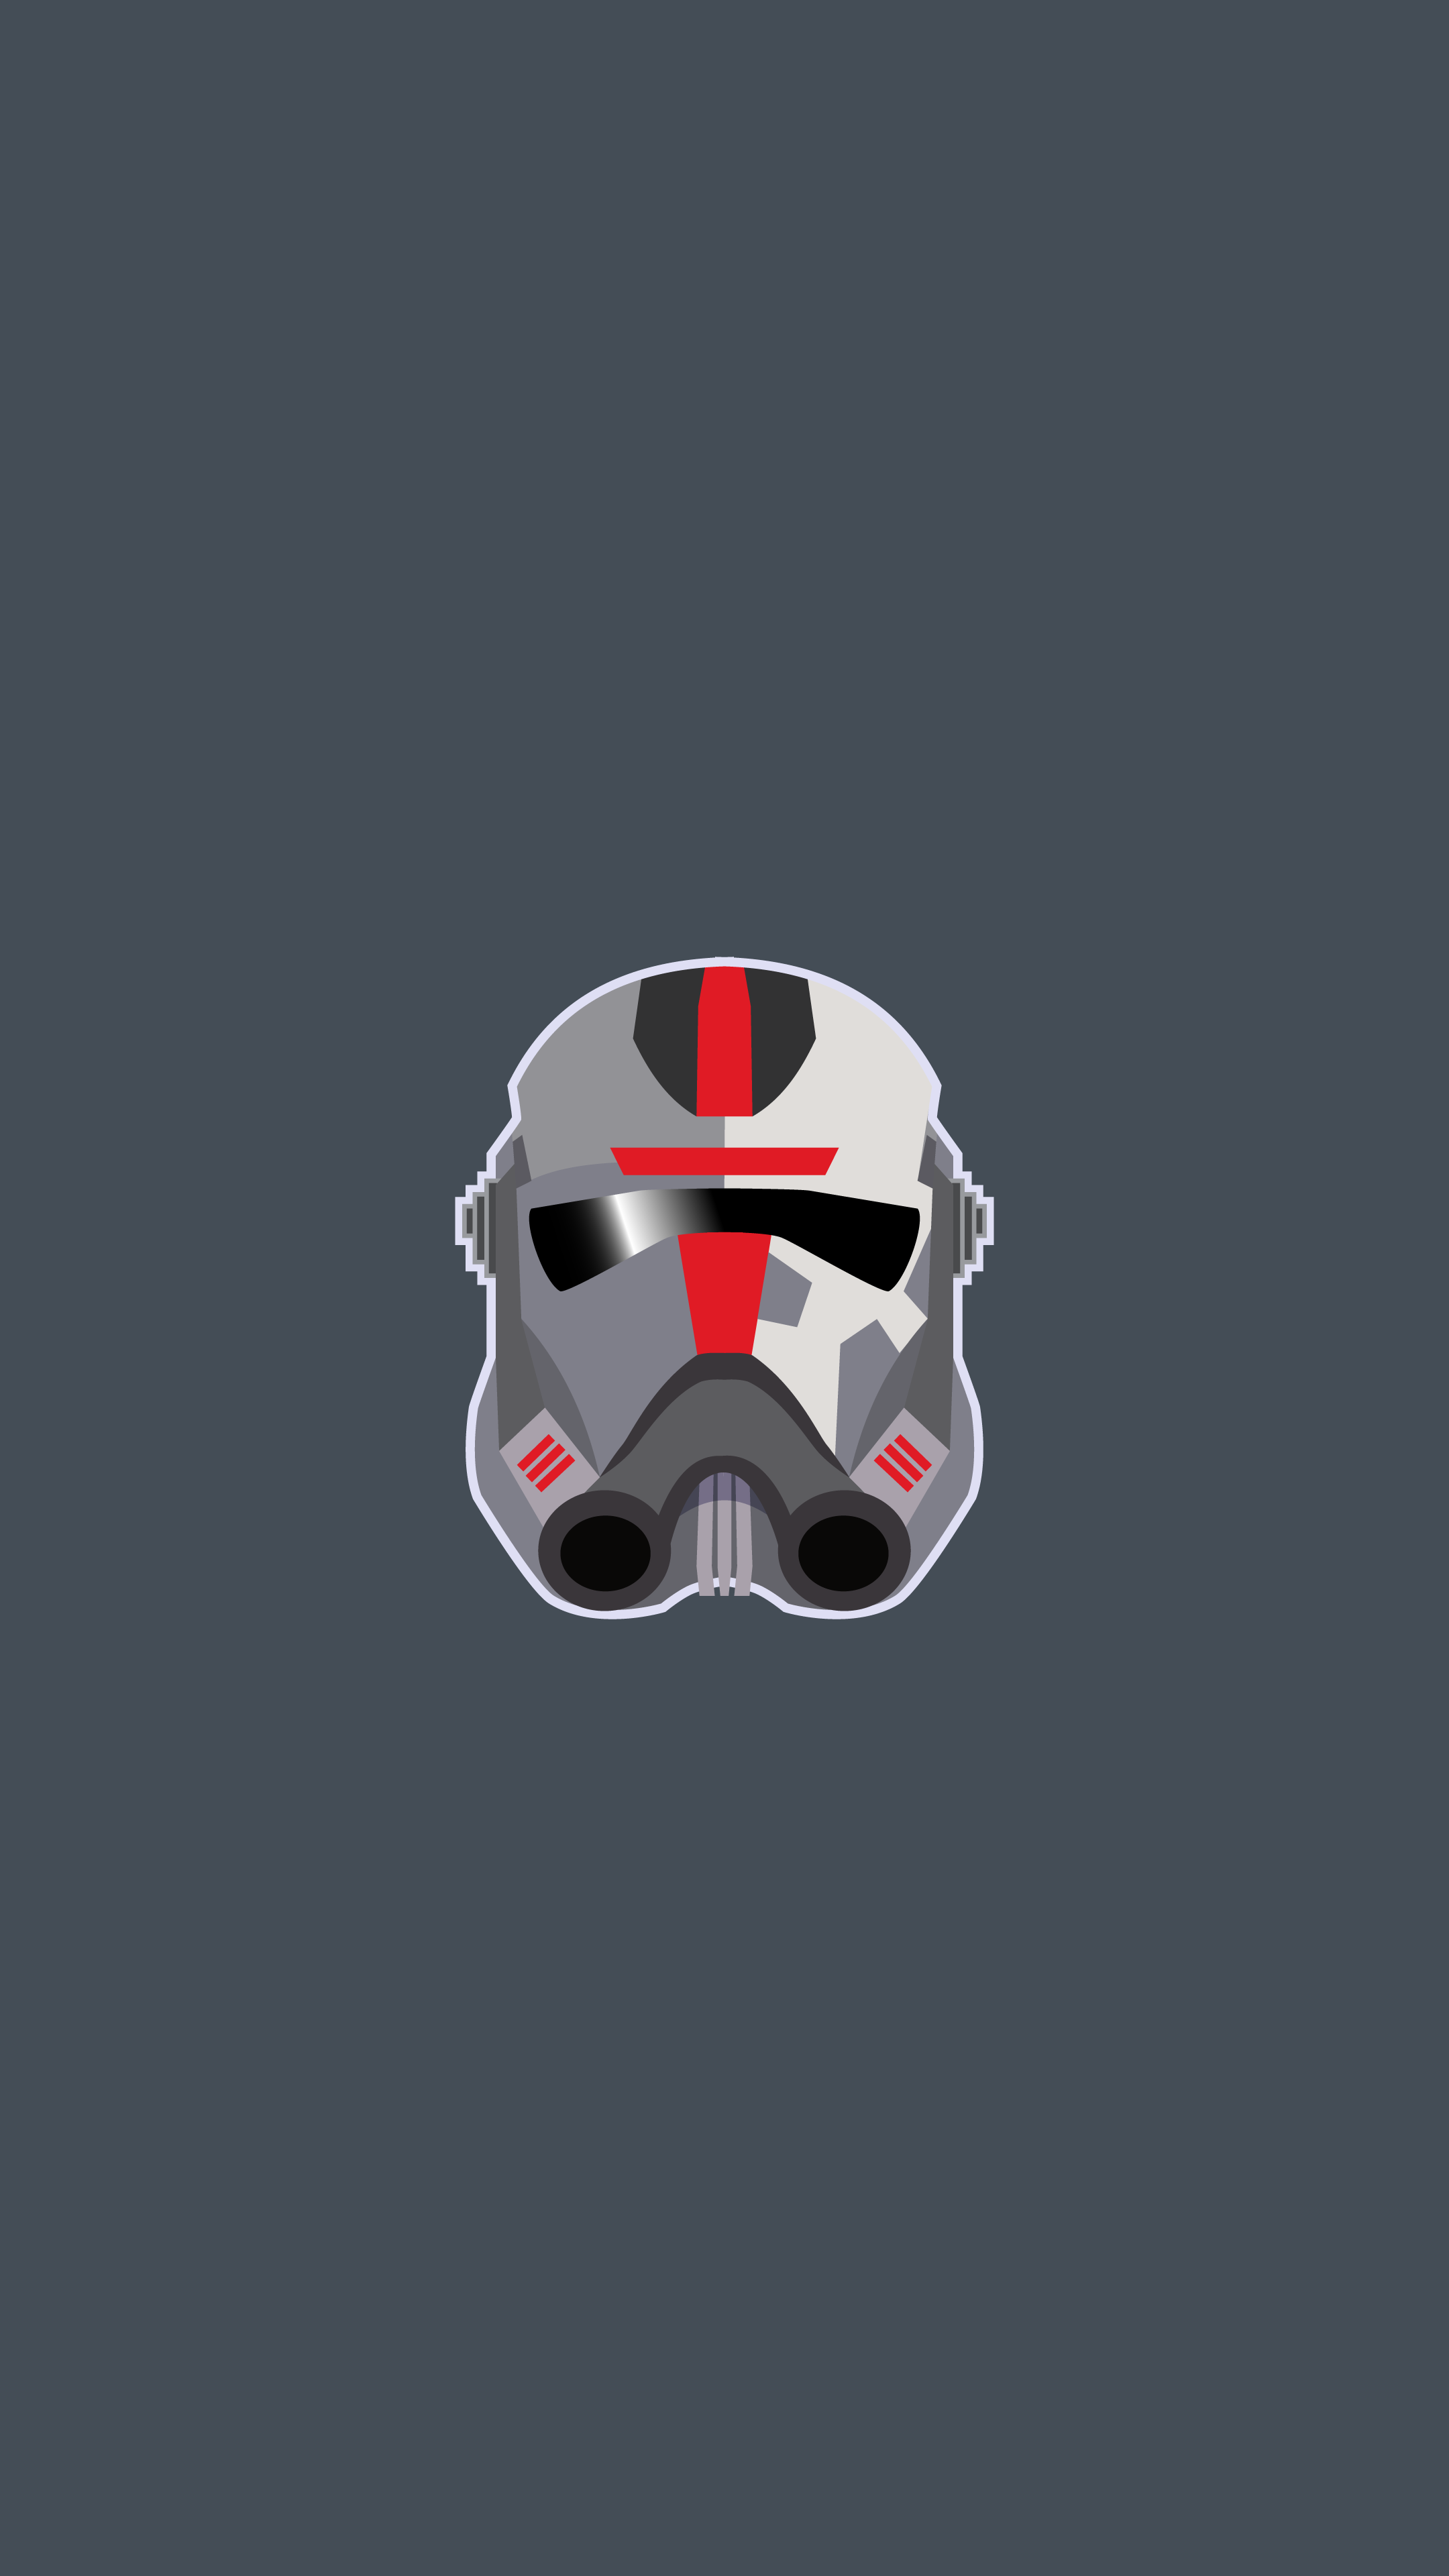 General 2160x3840 star wars bad batch Star Wars bad batch helmet clone trooper TV series minimalism gray background portrait display